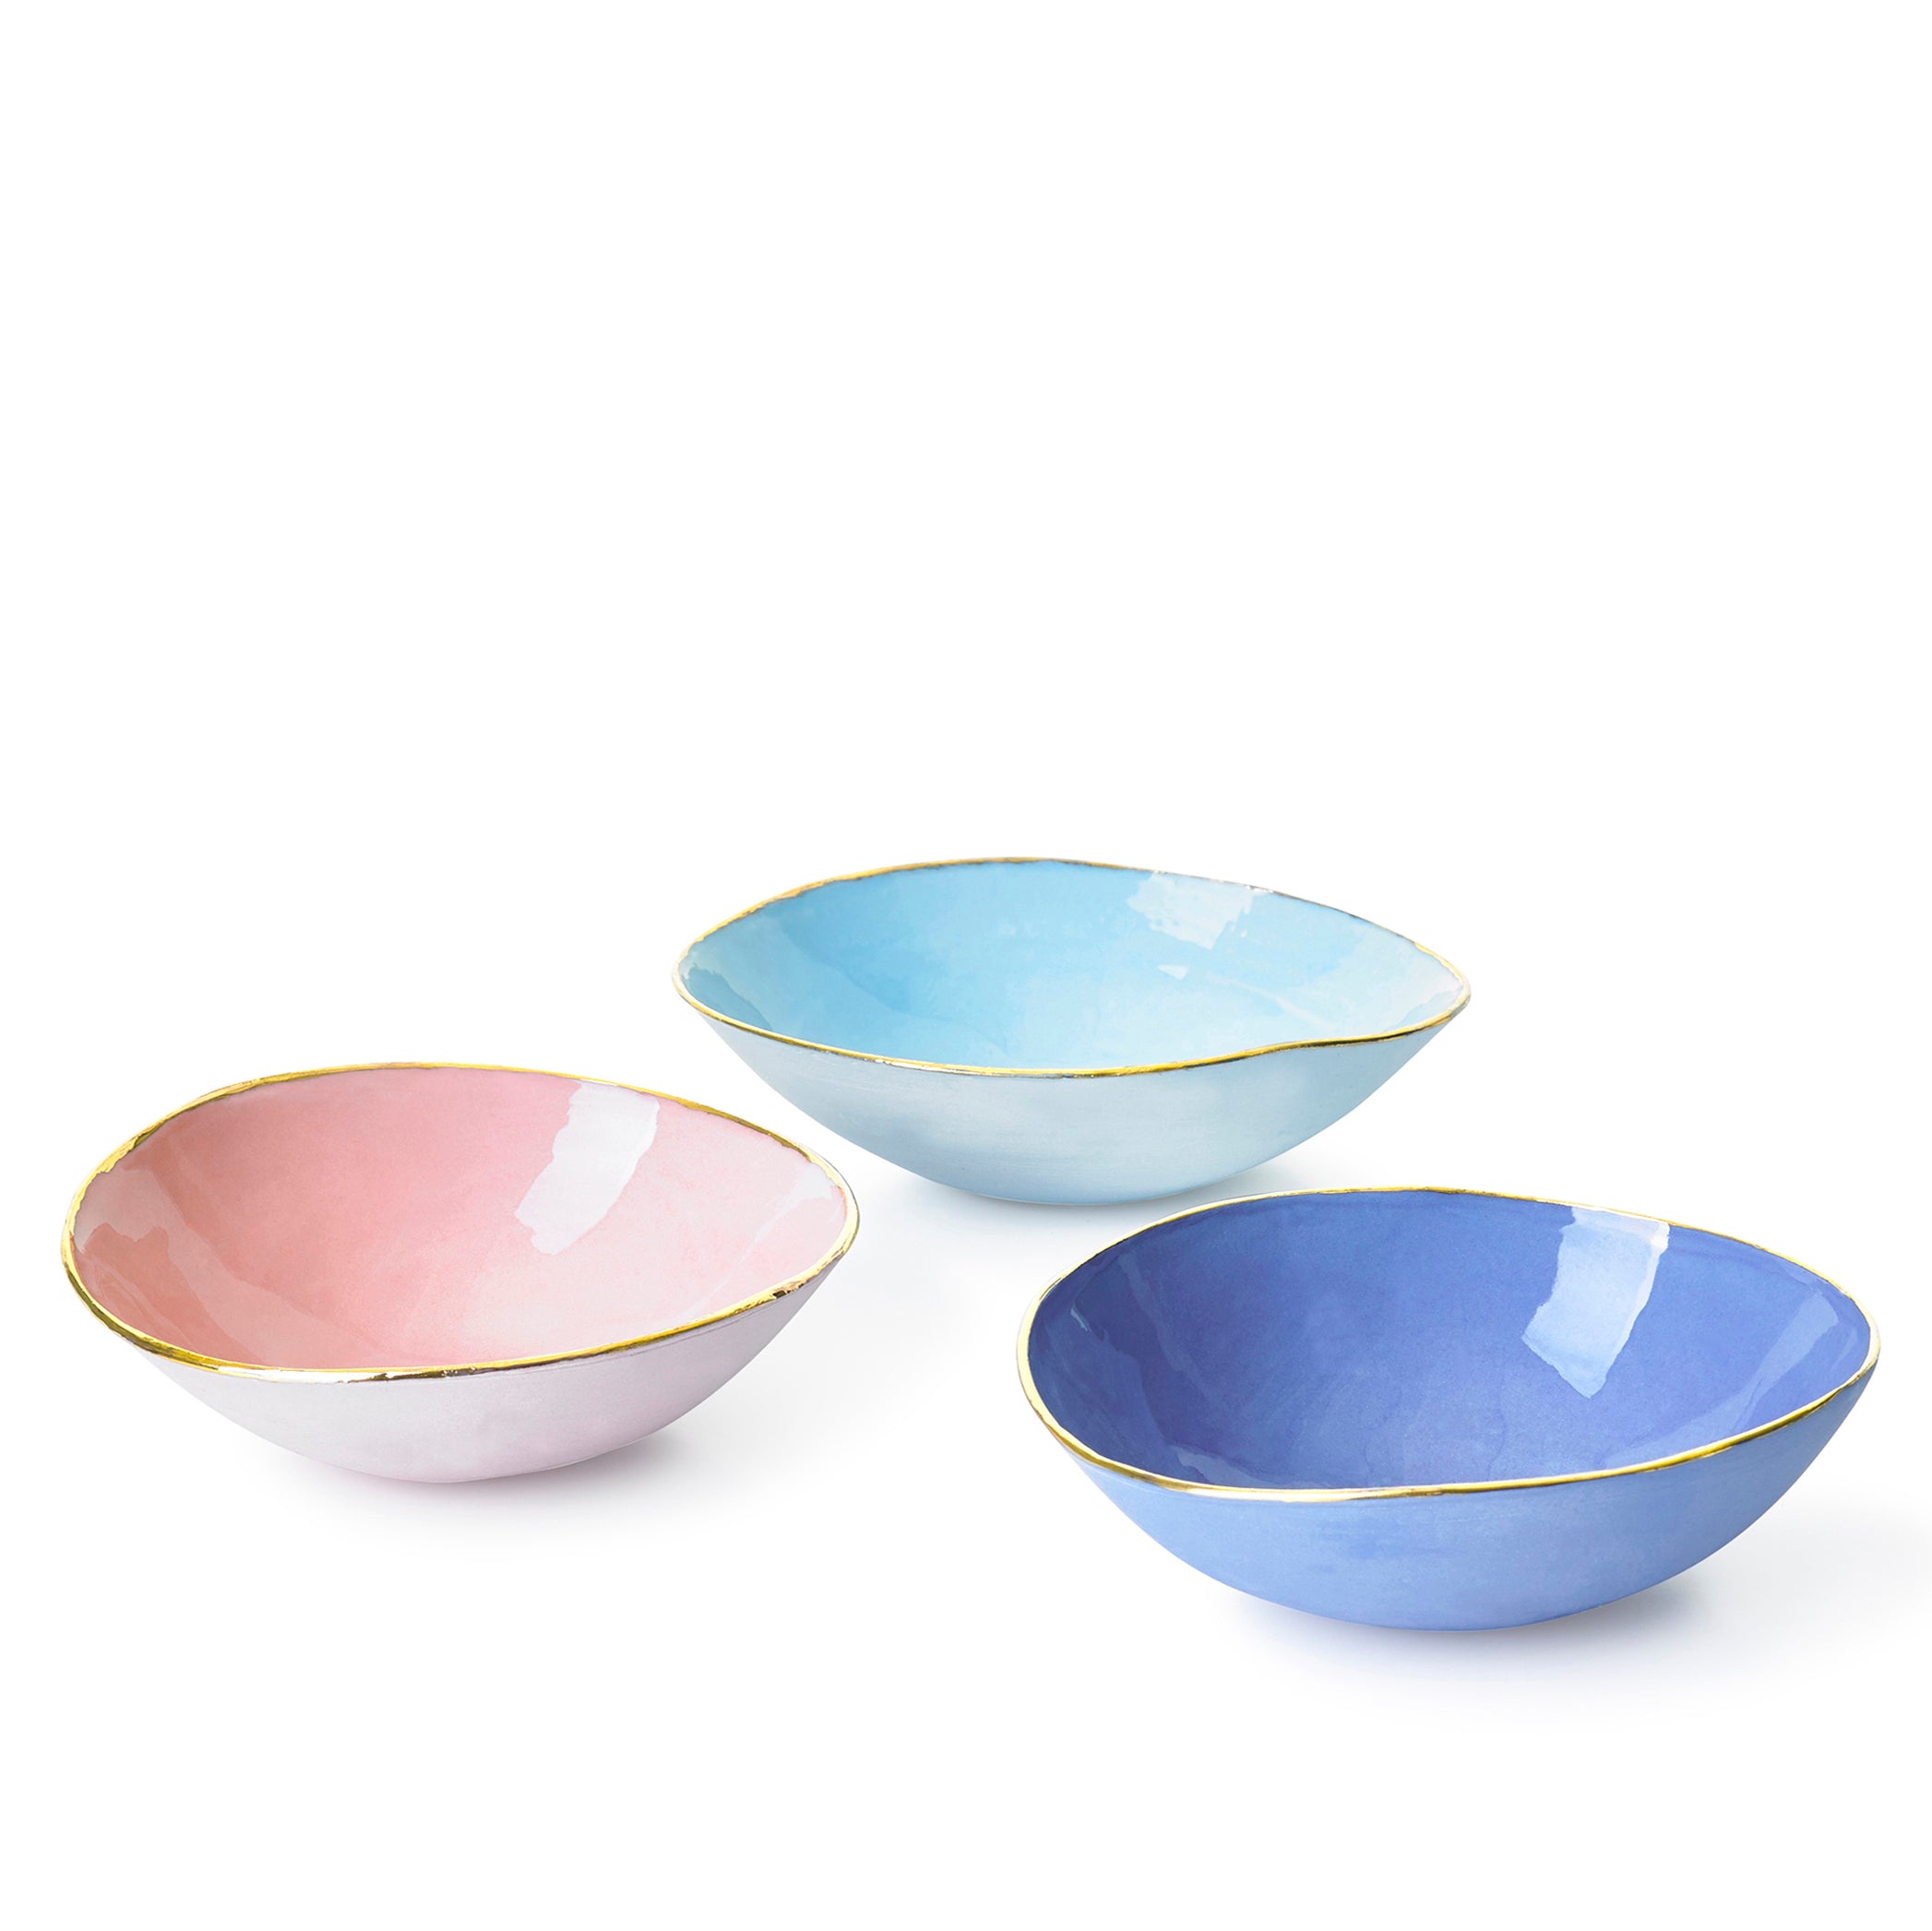 Pink Ceramic Bowl with Gold Rim, 16cm